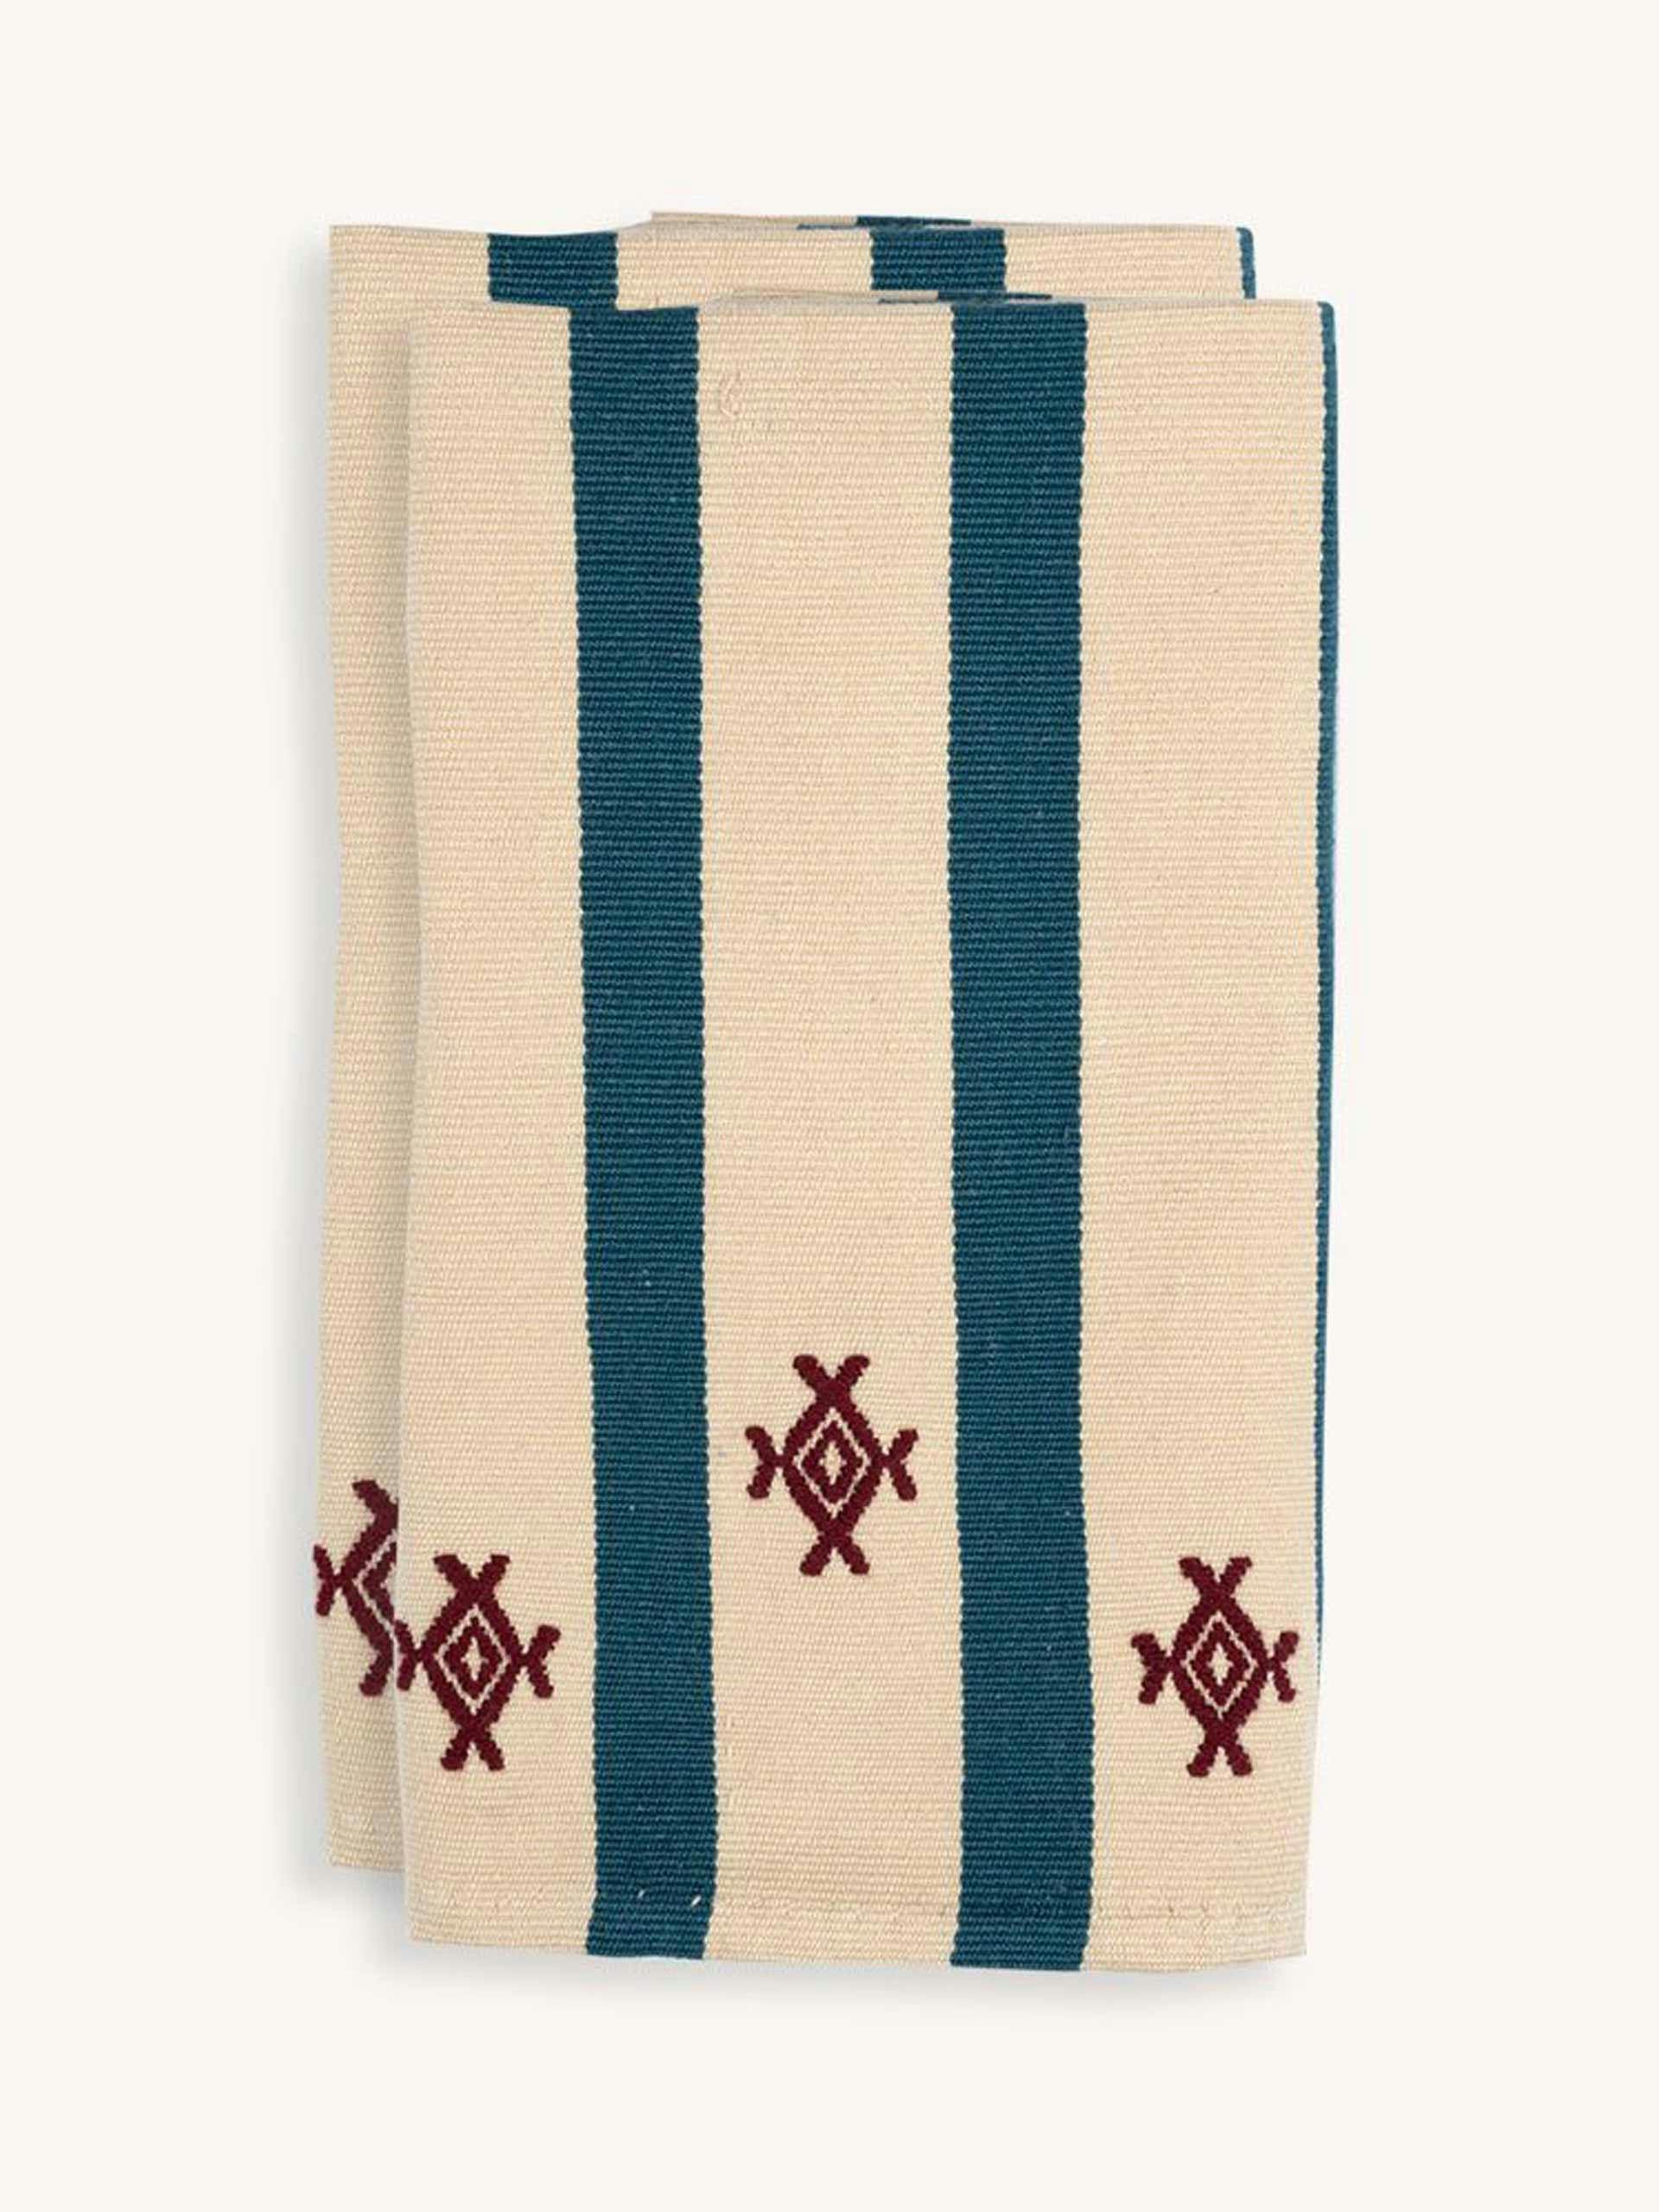 Izamna handwoven striped napkins (set of 2)